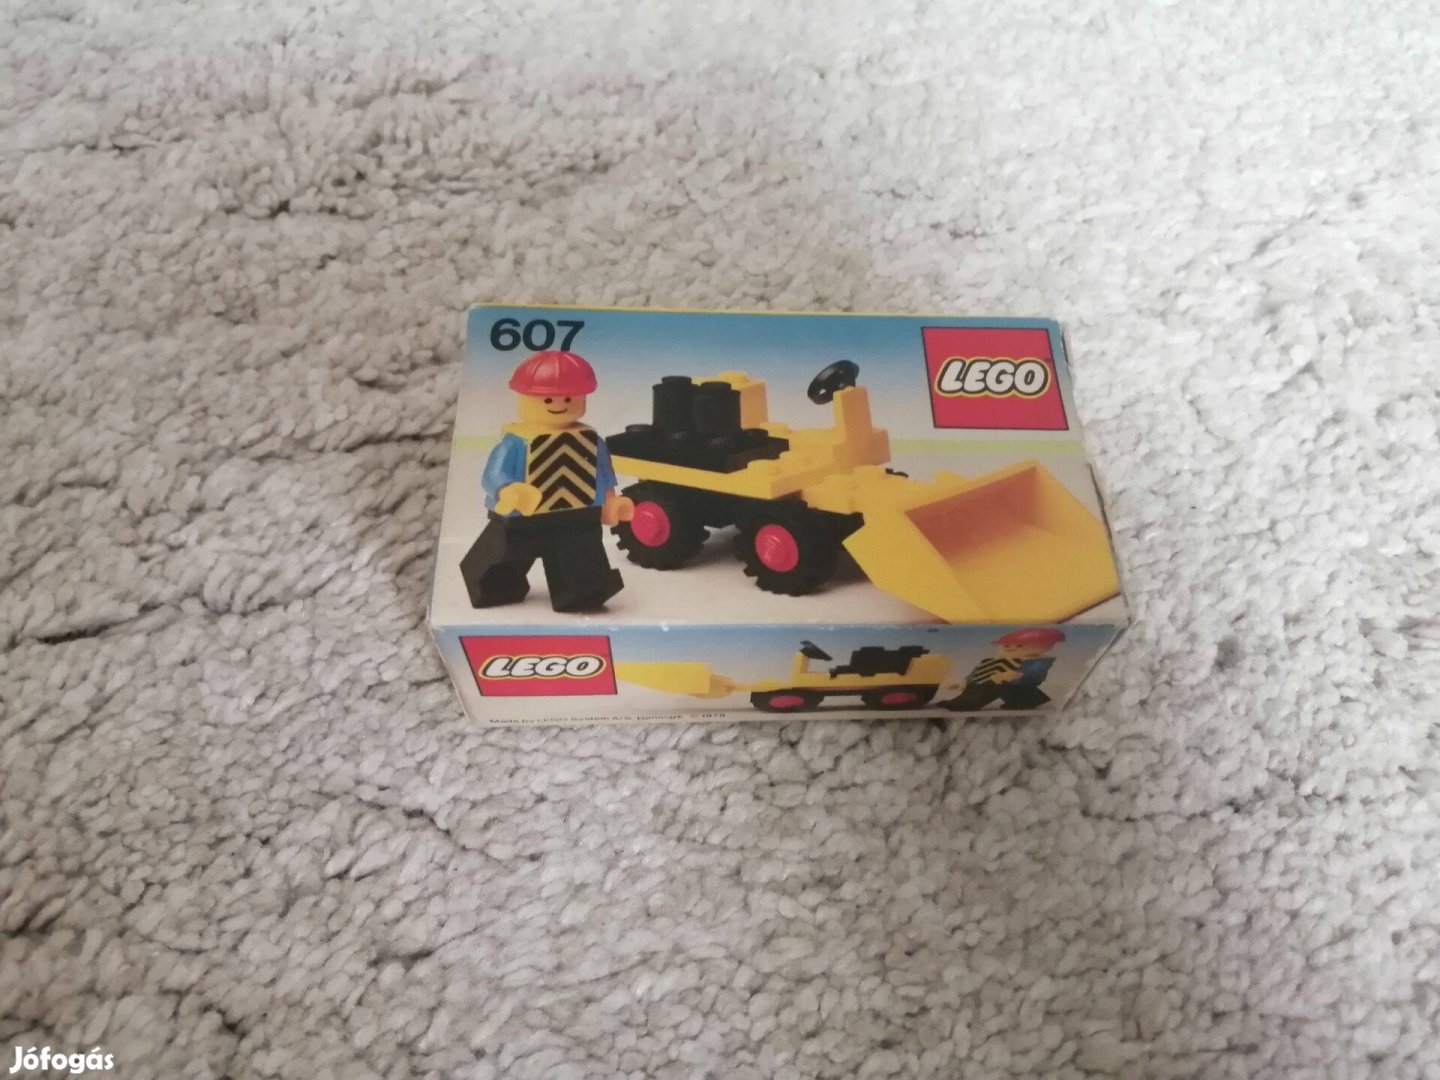 LEGO 607 mini loader classic town